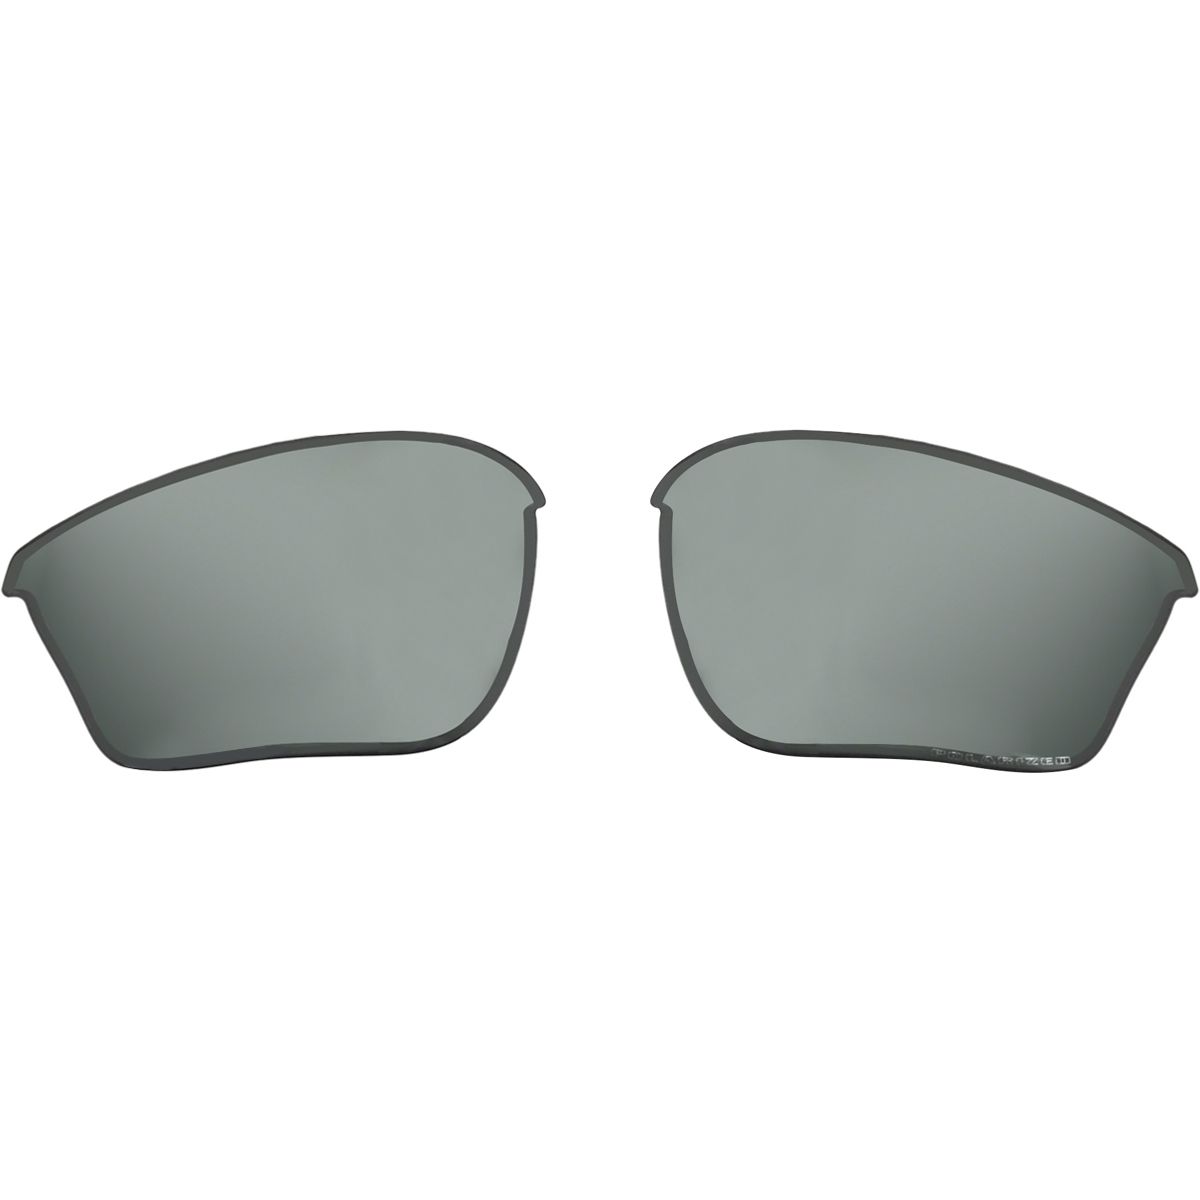 Oakley Half Jacket 2.0 XL Sunglasses Replacement Lens